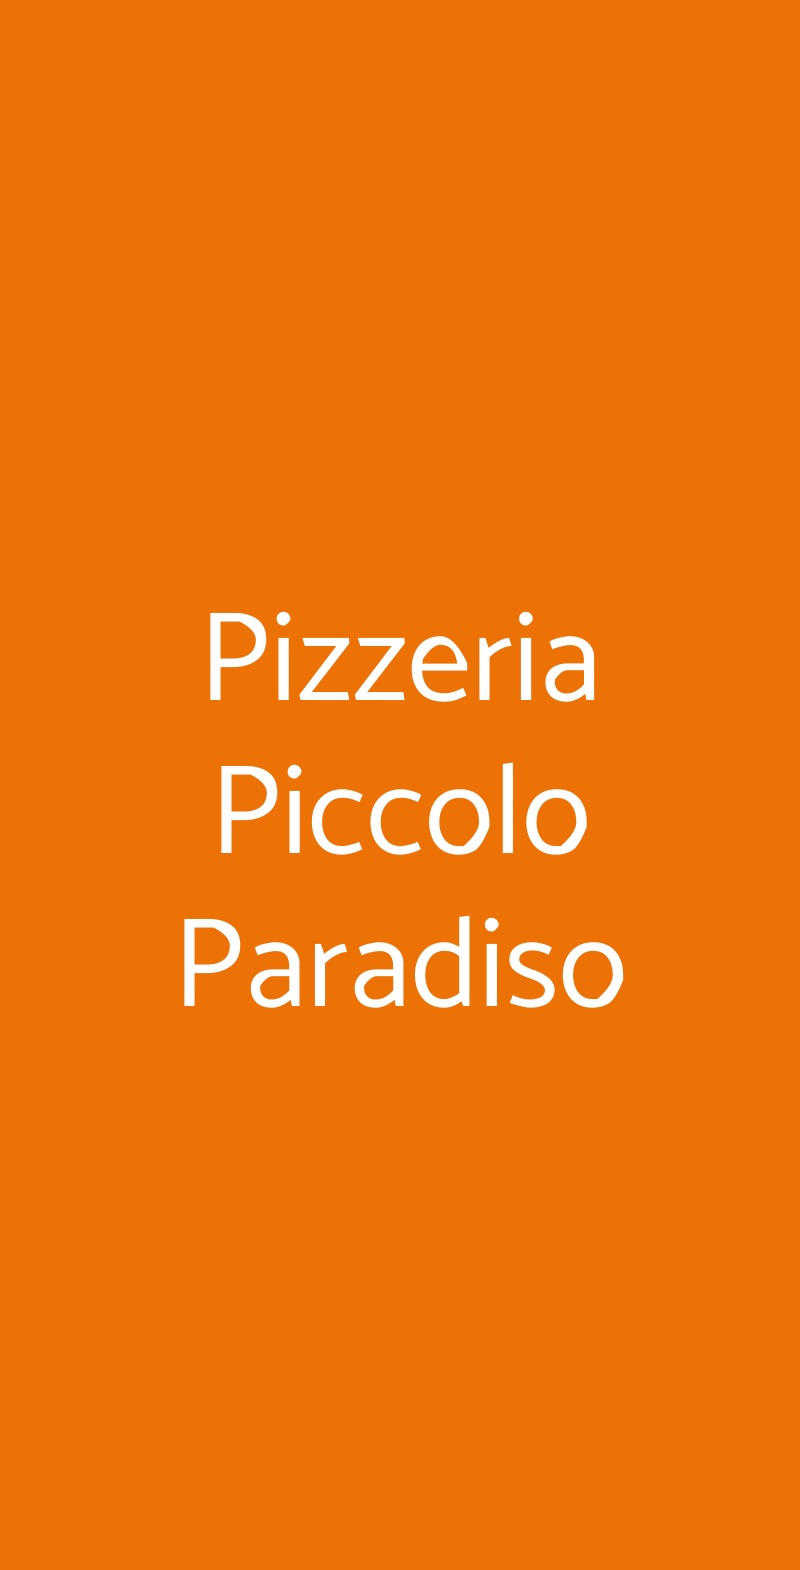 Pizzeria Piccolo Paradiso Milano menù 1 pagina